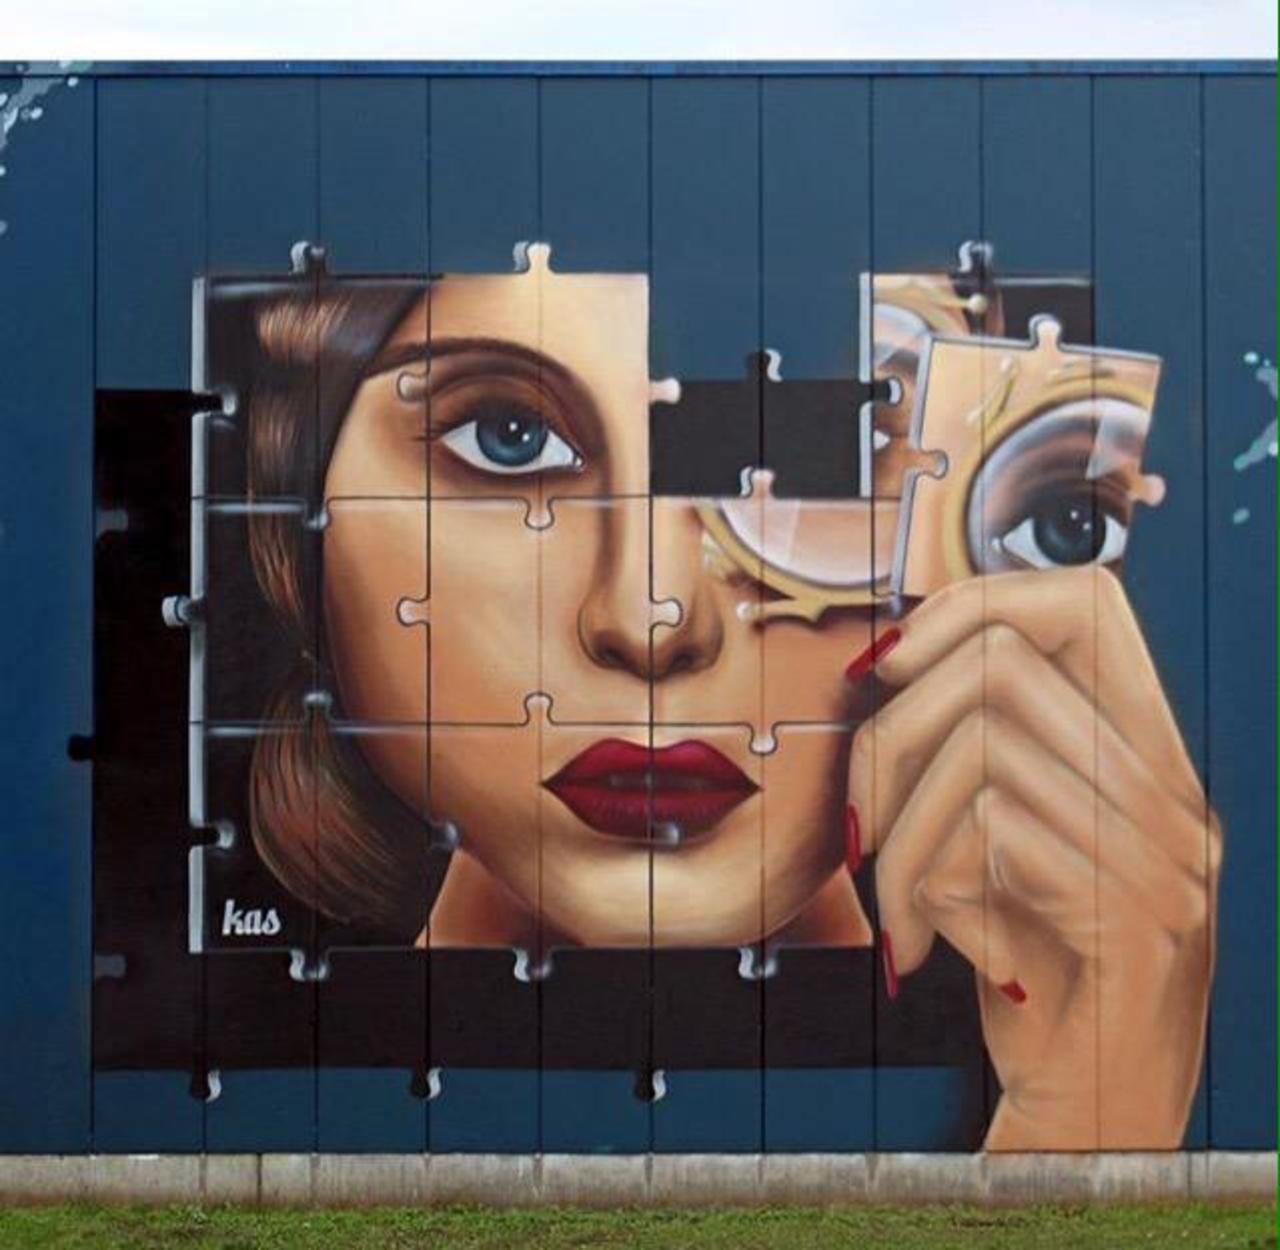 Kas Art's new Street Art "Piece of me" in Aalst Belgium 

#art #graffiti #mural #streetart http://t.co/oxd04k9x5C